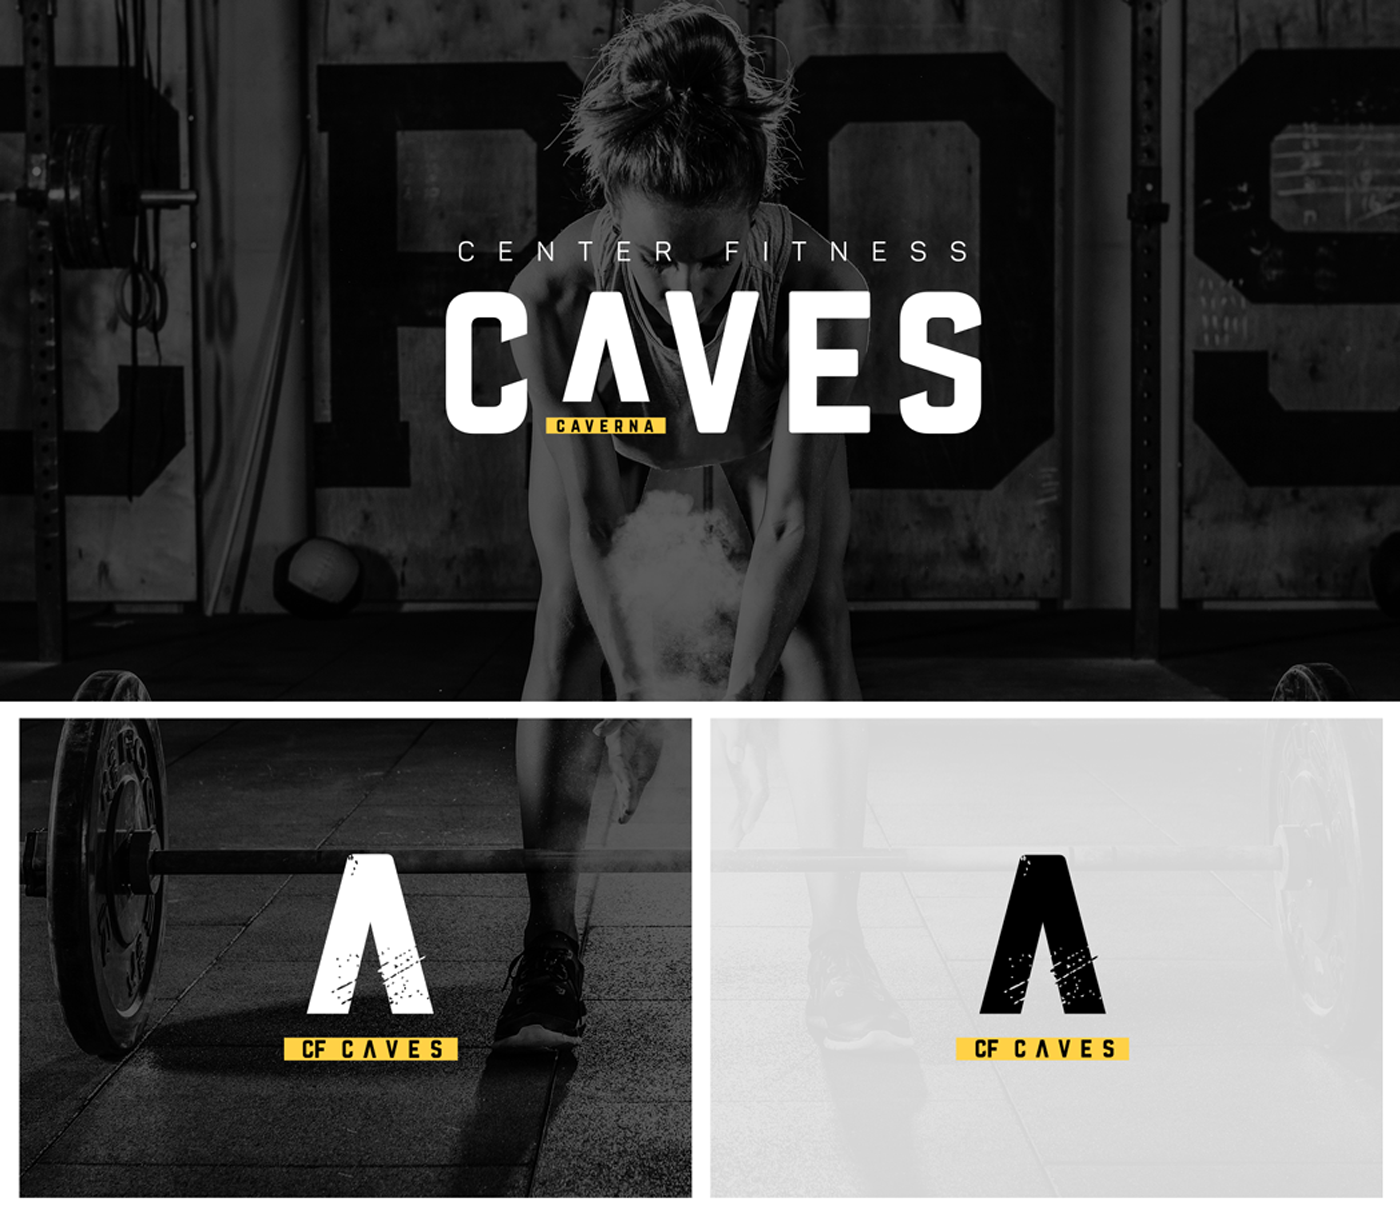 Center Fitness Caves - Crossfit Branding - Center Fitness Caves - Crossfit Branding -   14 fitness Logo crossfit ideas